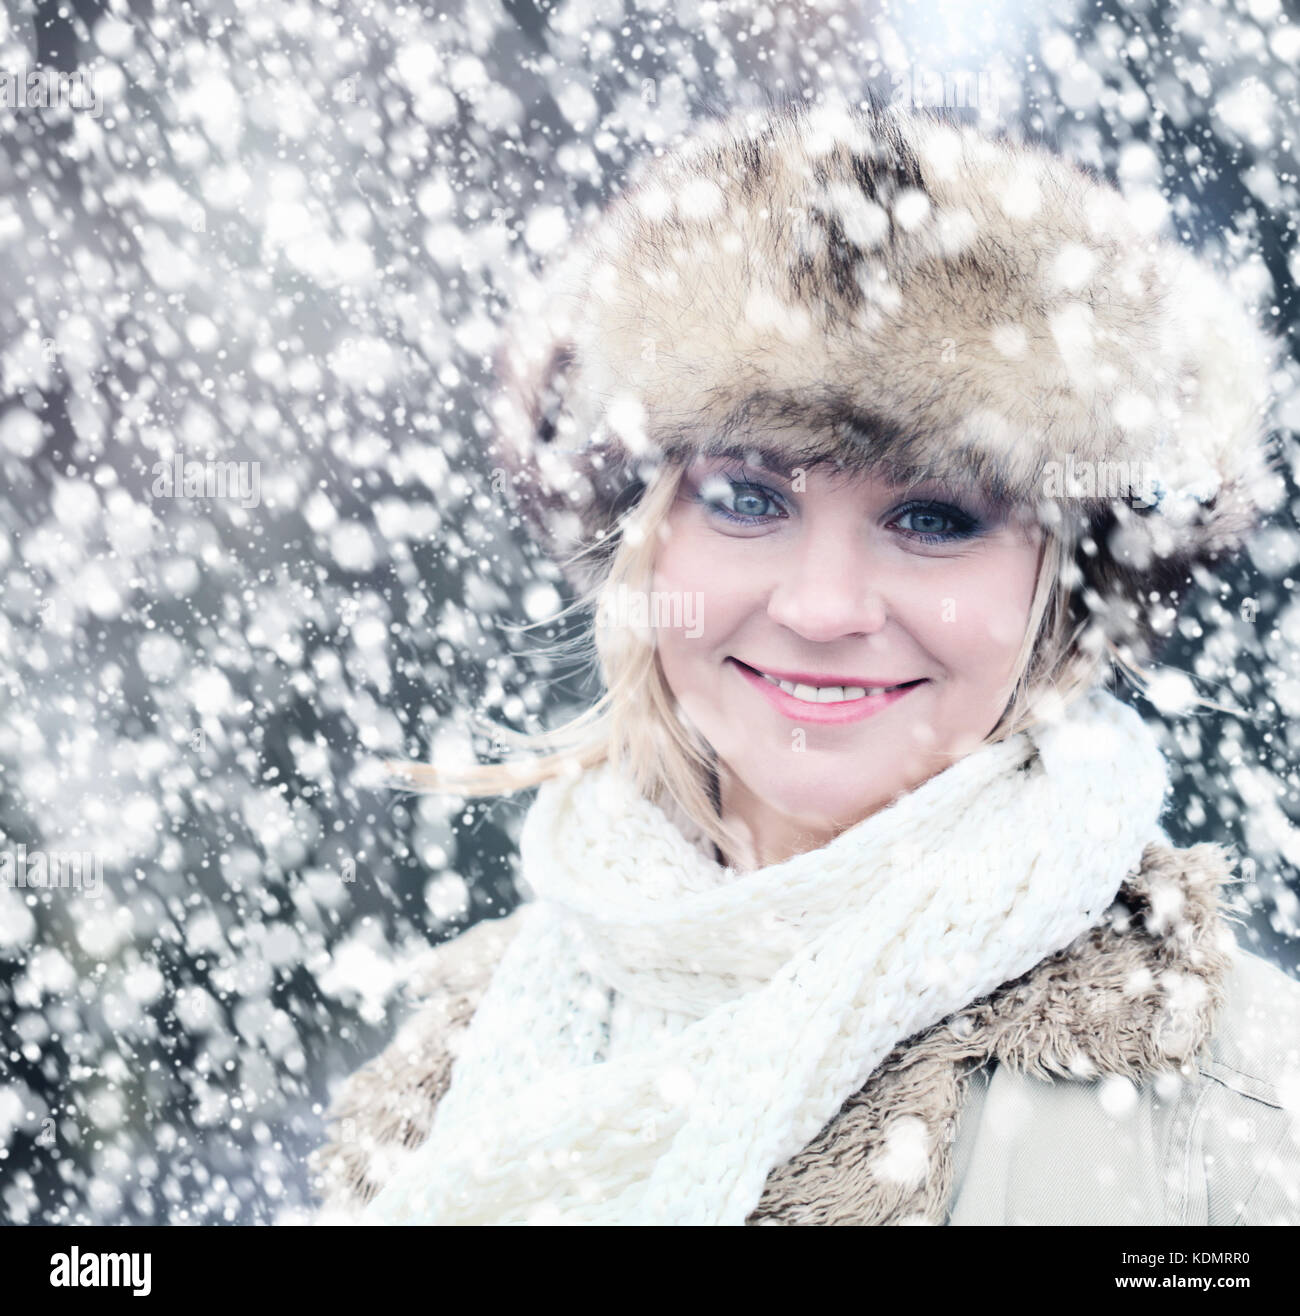 Winter Woman Outdoors. Fashion Portrait of Pretty Girl Wearing Winter Hat Stock Photo